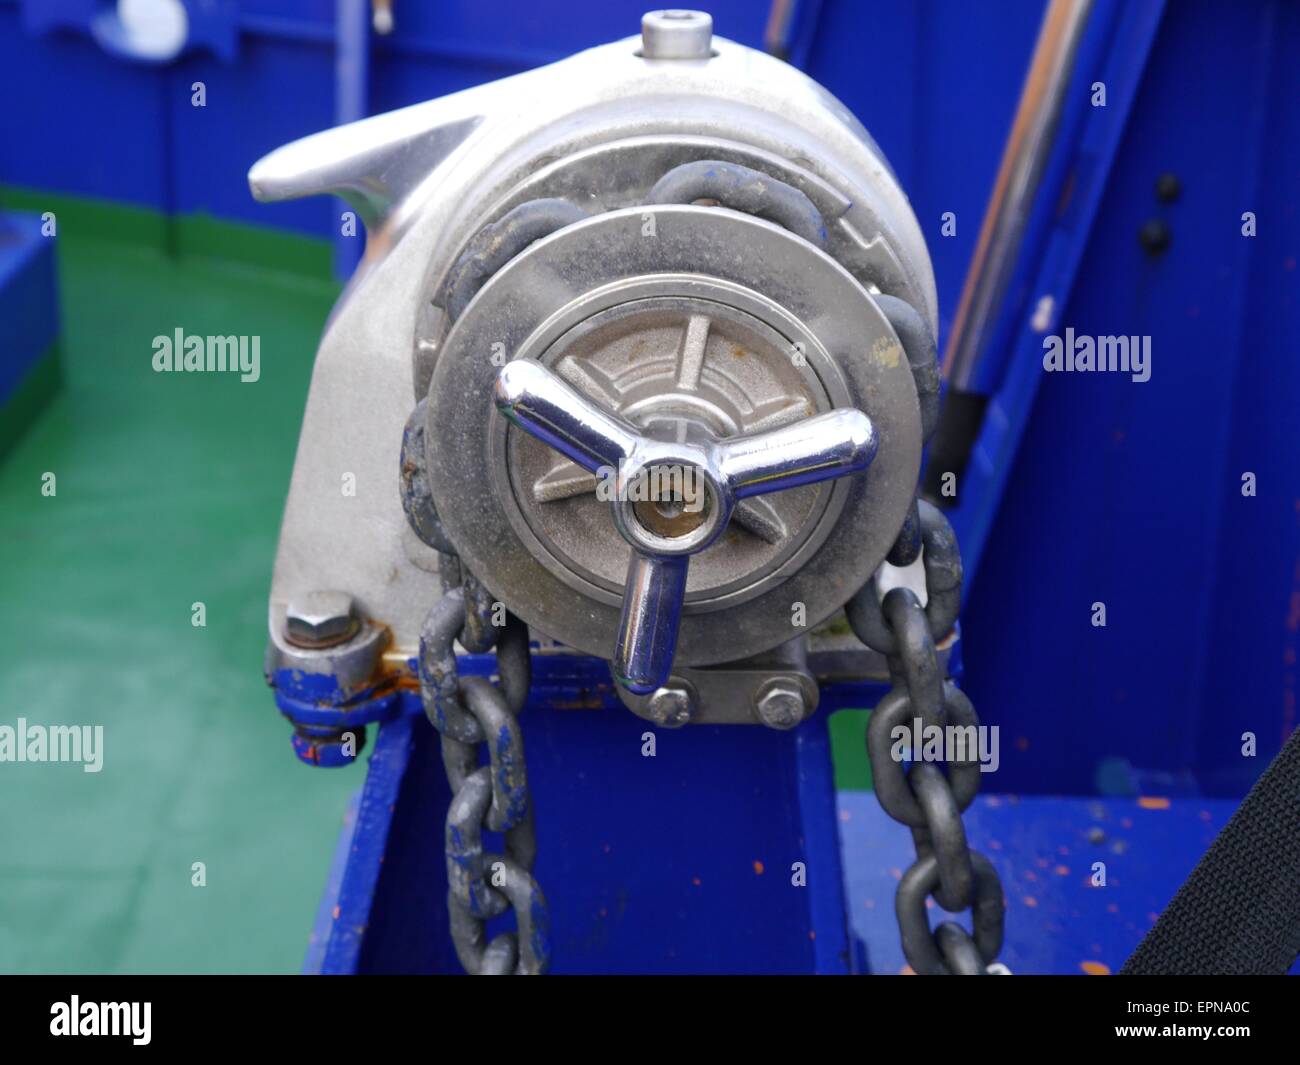 manual anchor lifting device on ship Stock Photo